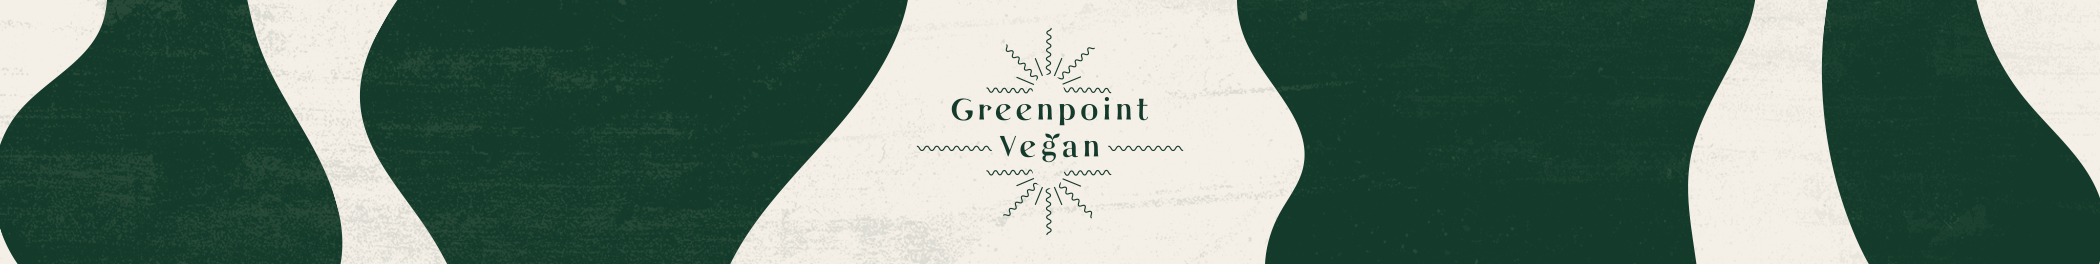 Greenpoint Vegan